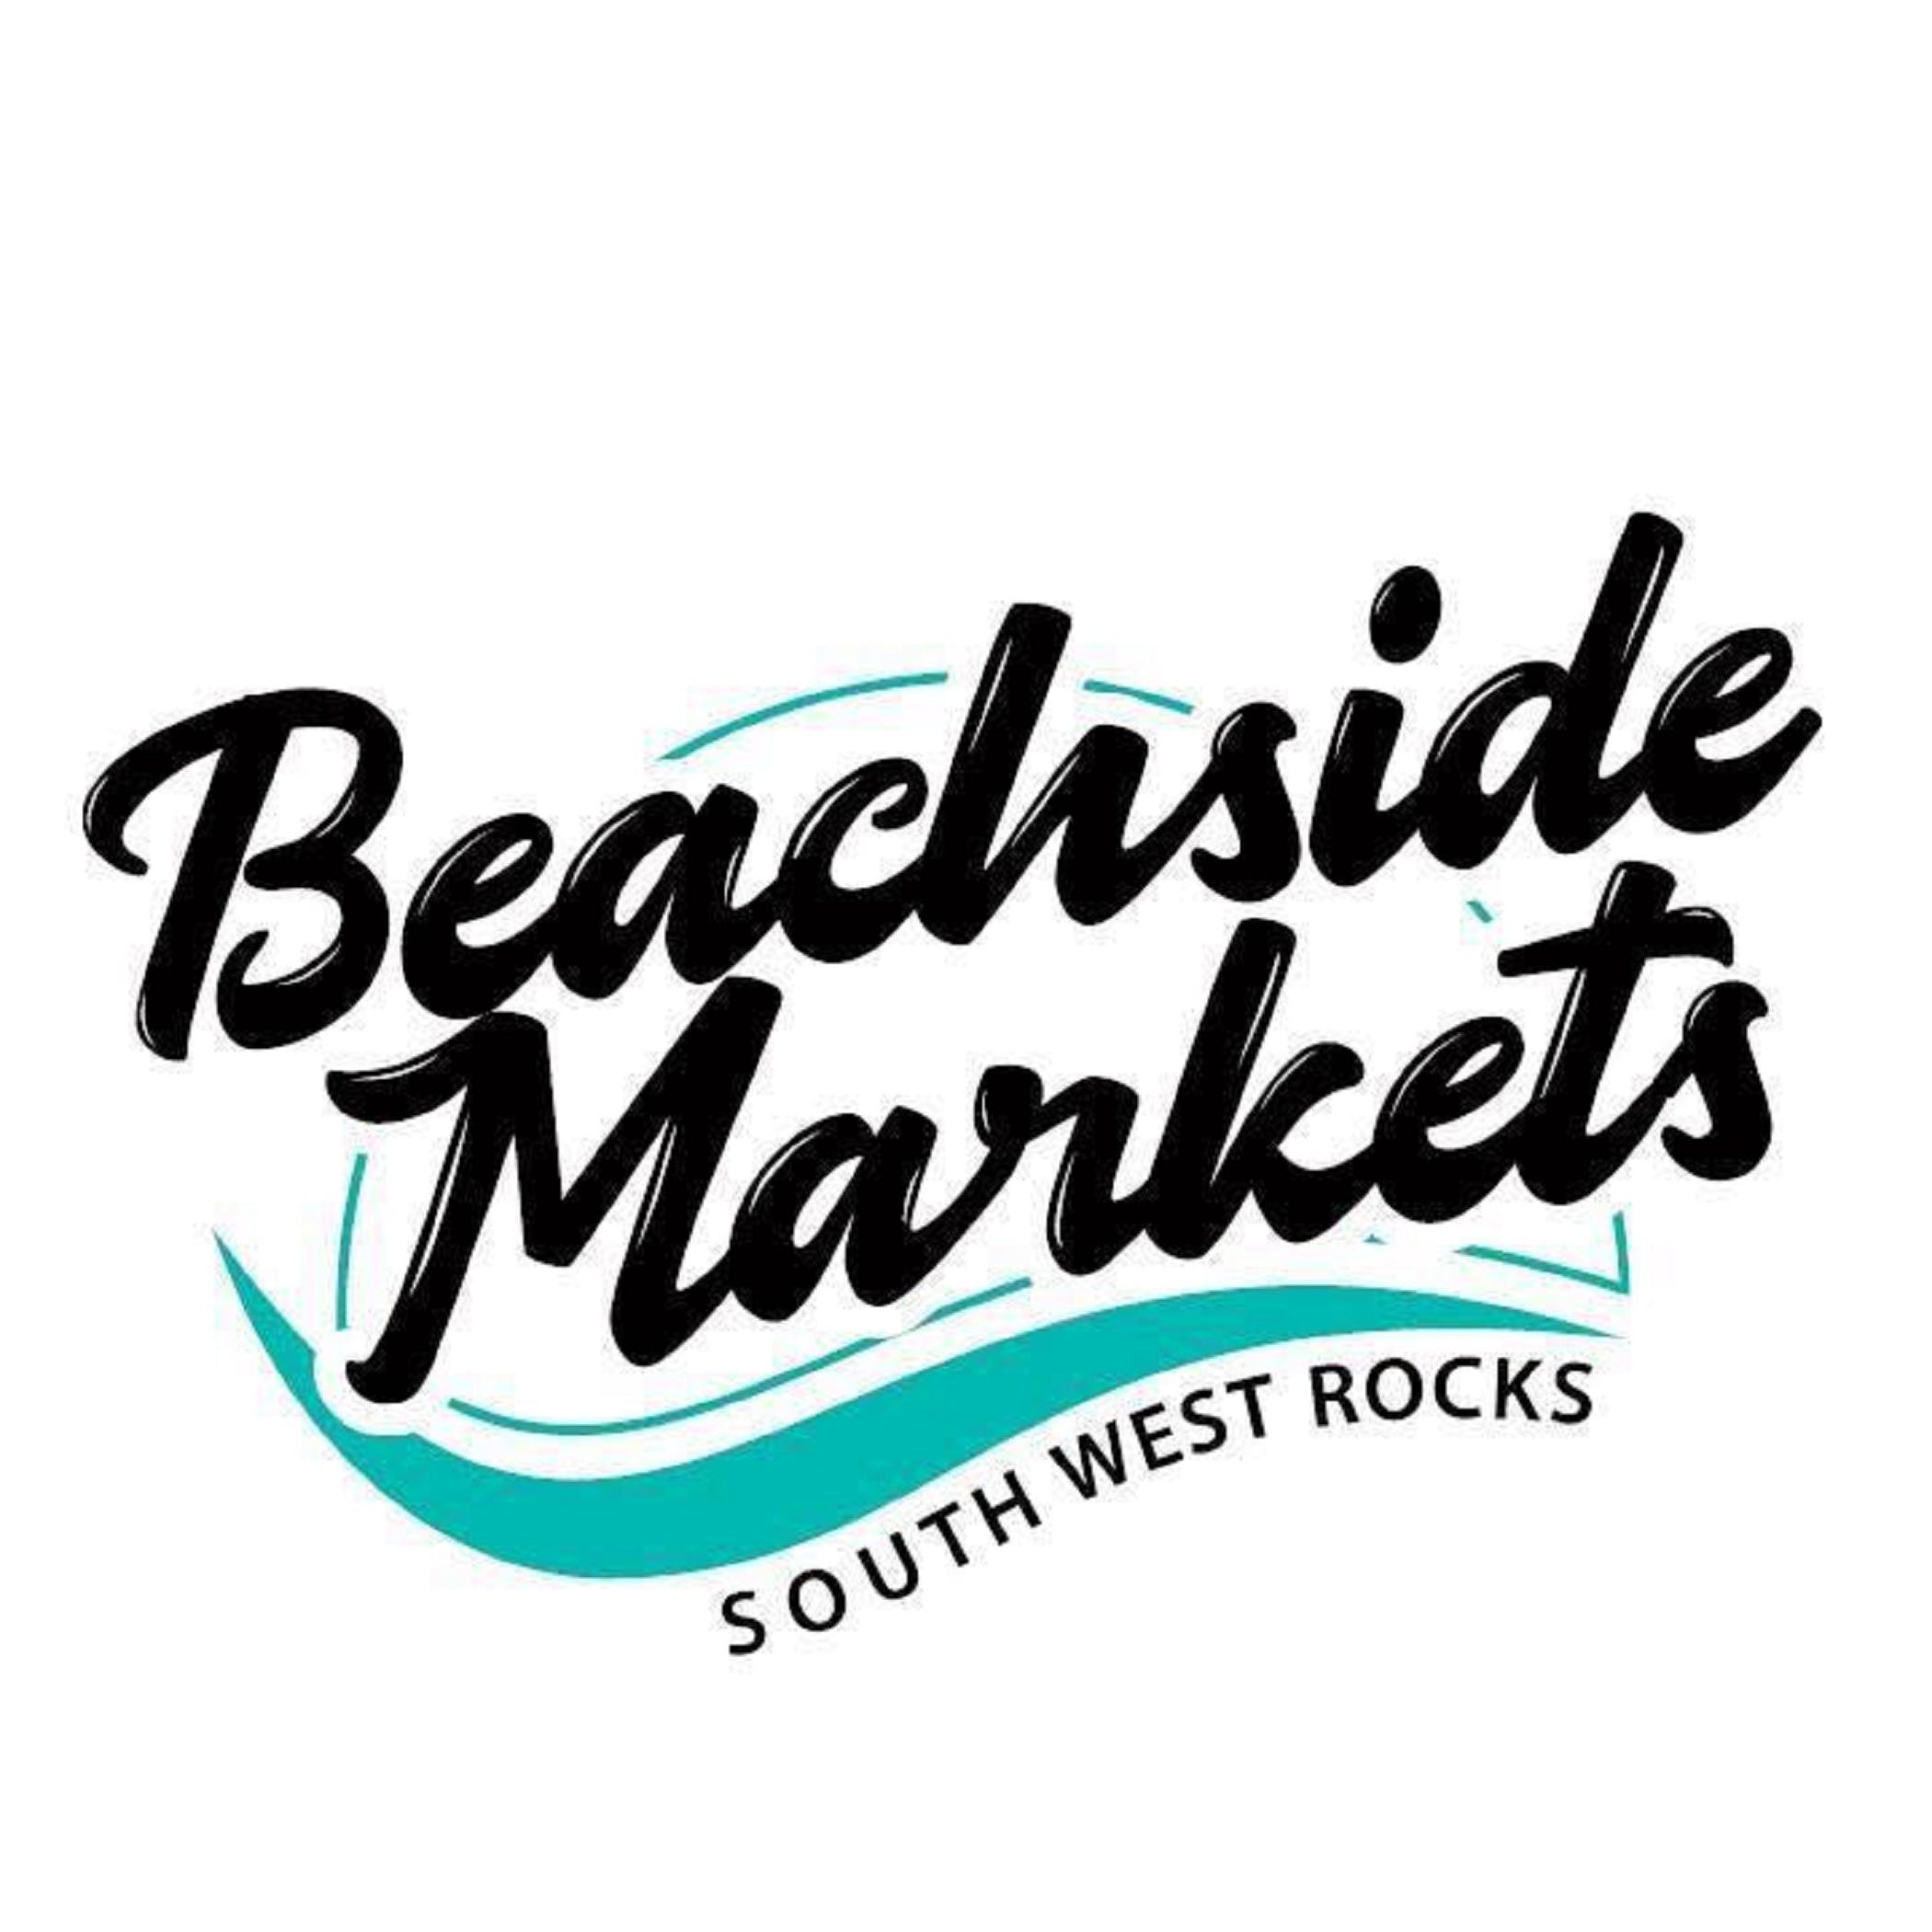 Beachside Markets South West Rocks - Lennox Head Accommodation